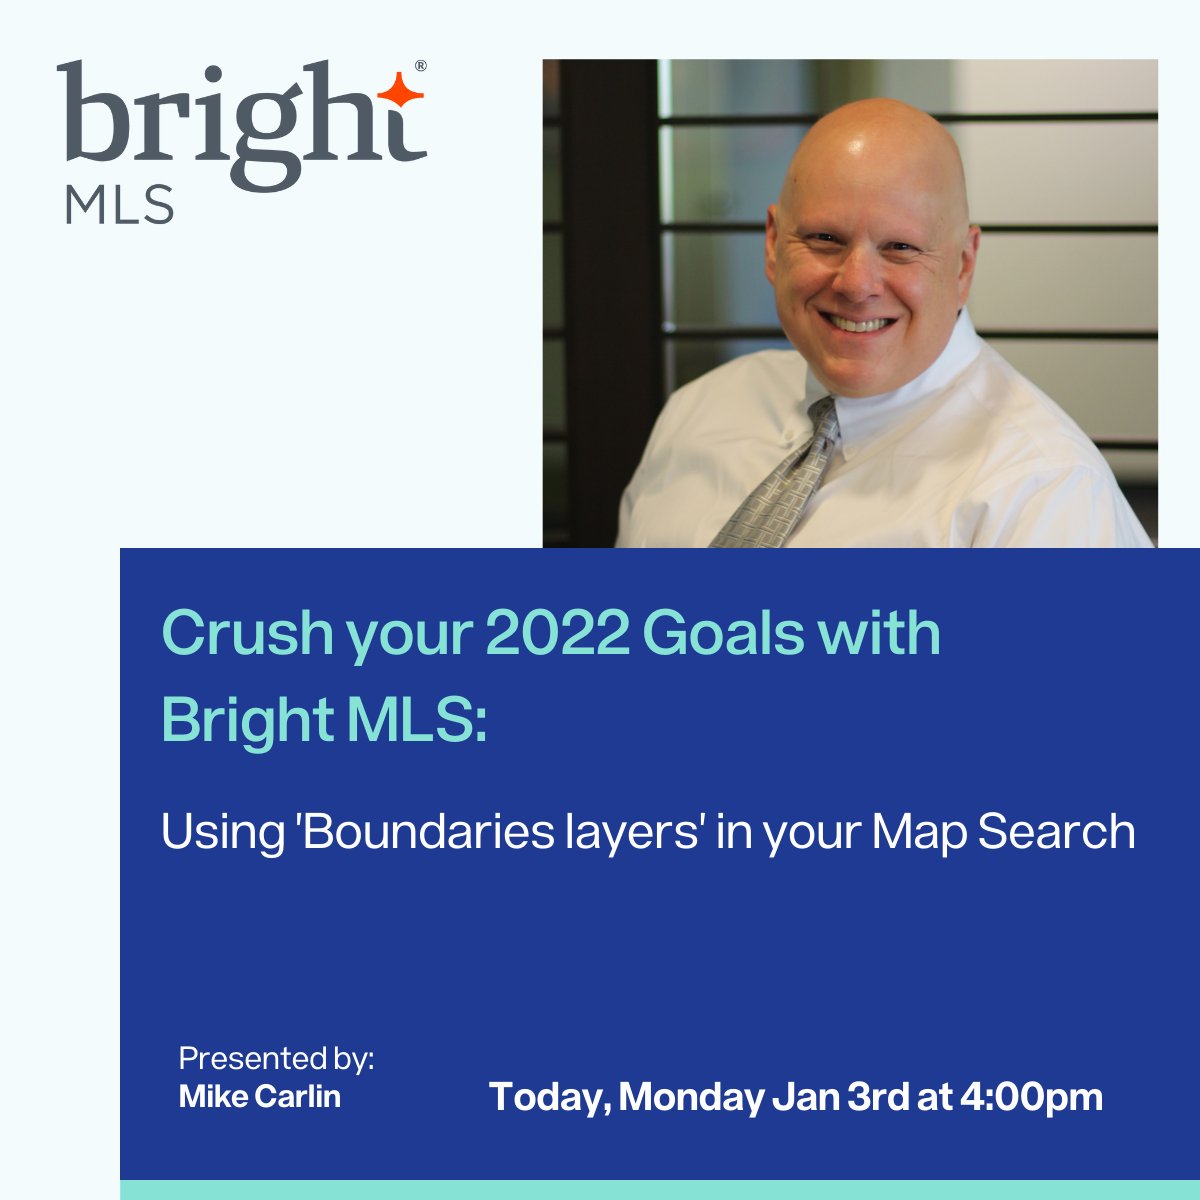 Bright MLS - Posts - Facebook